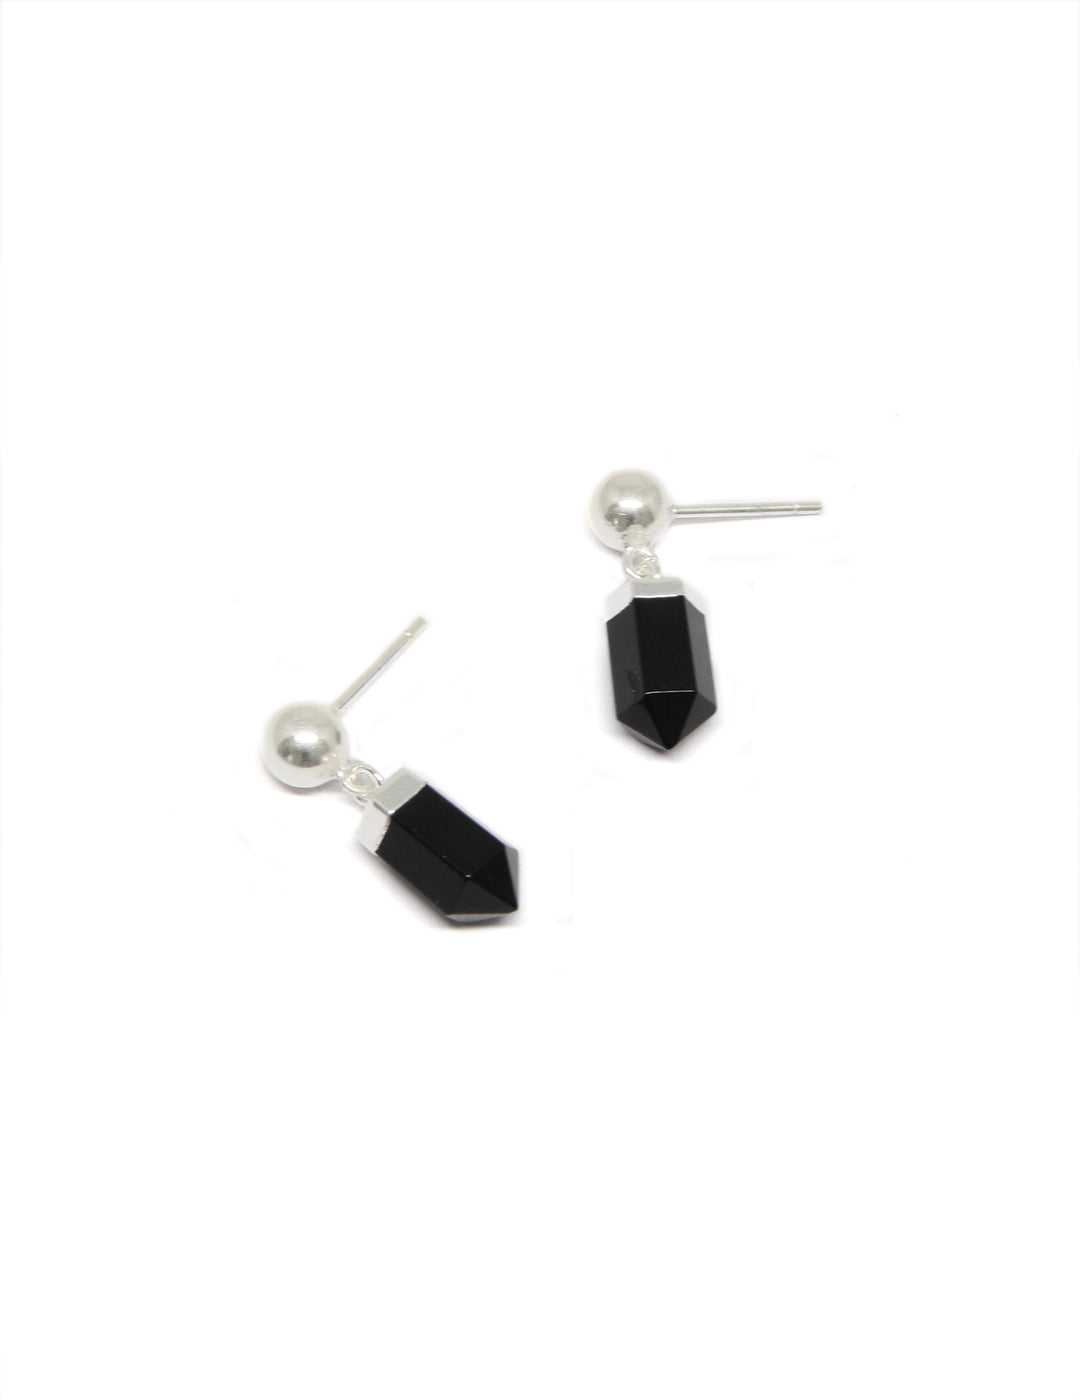 llayers-jewelry-black-agate-onyx-silver-earrings-brooklyn-newyork-F3